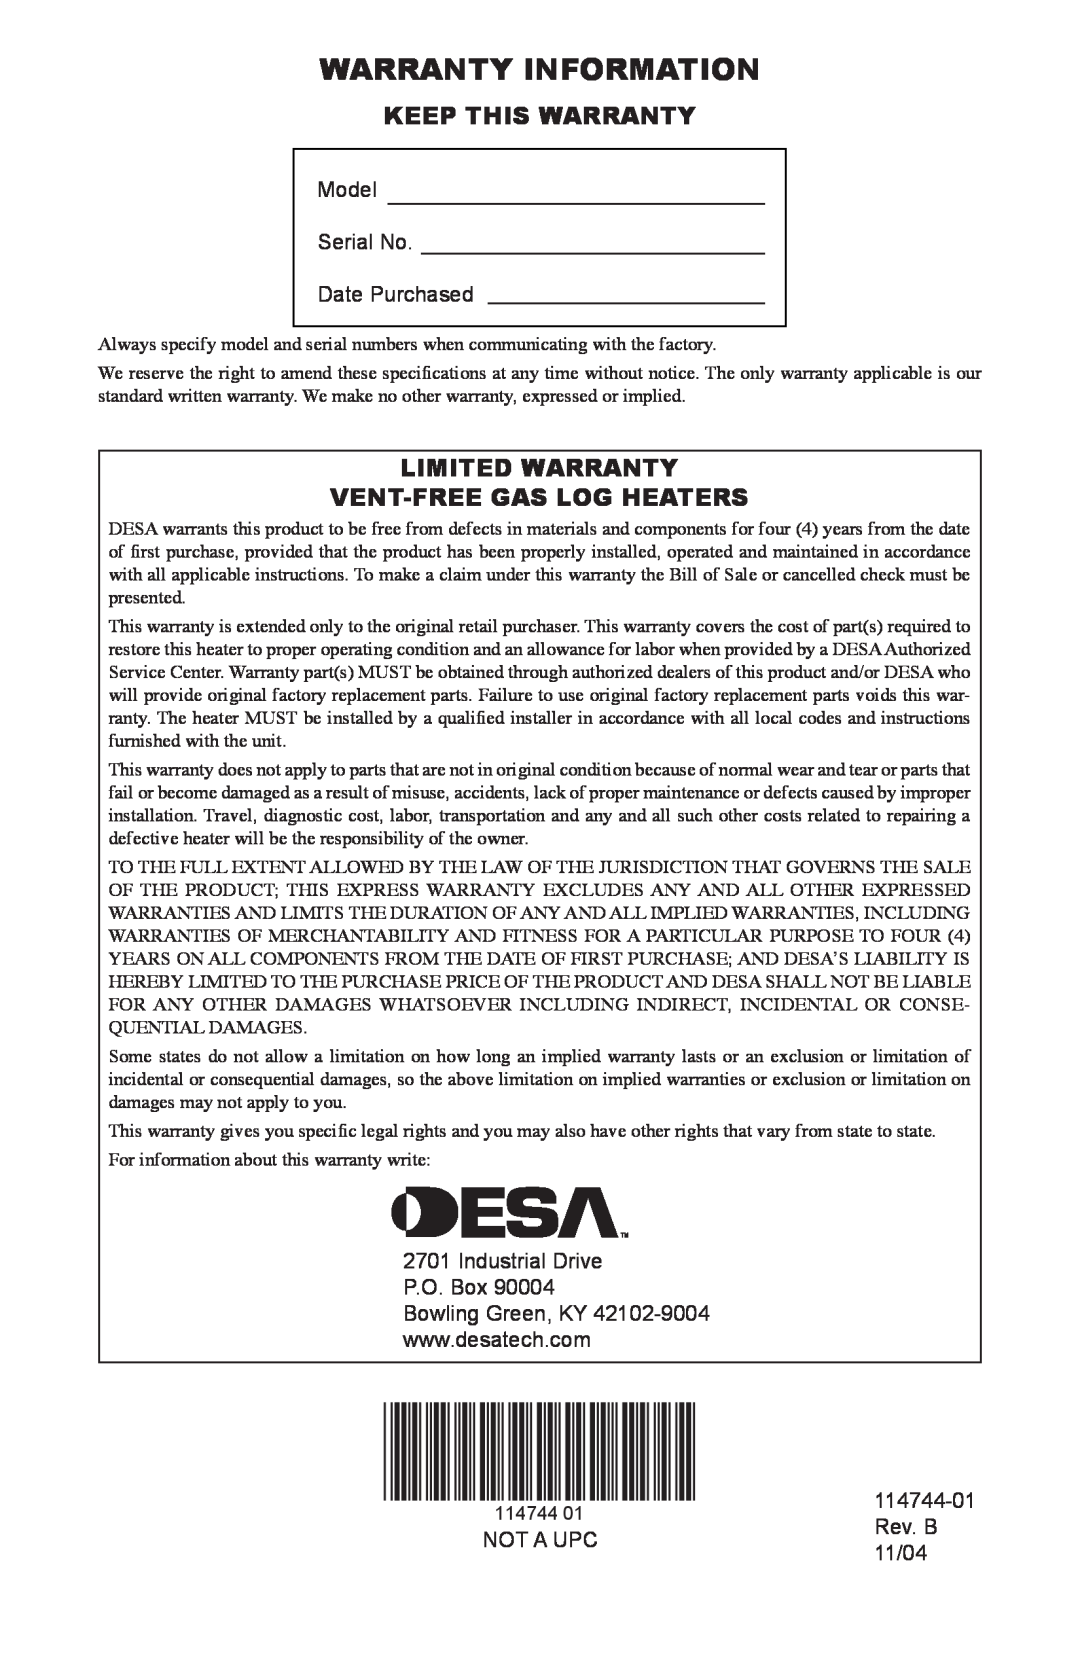 Desa SBJ18VPA Keep This Warranty, Limited Warranty Vent-Freegas Log Heaters, Model Serial No Date Purchased, Rev. B, 11/04 